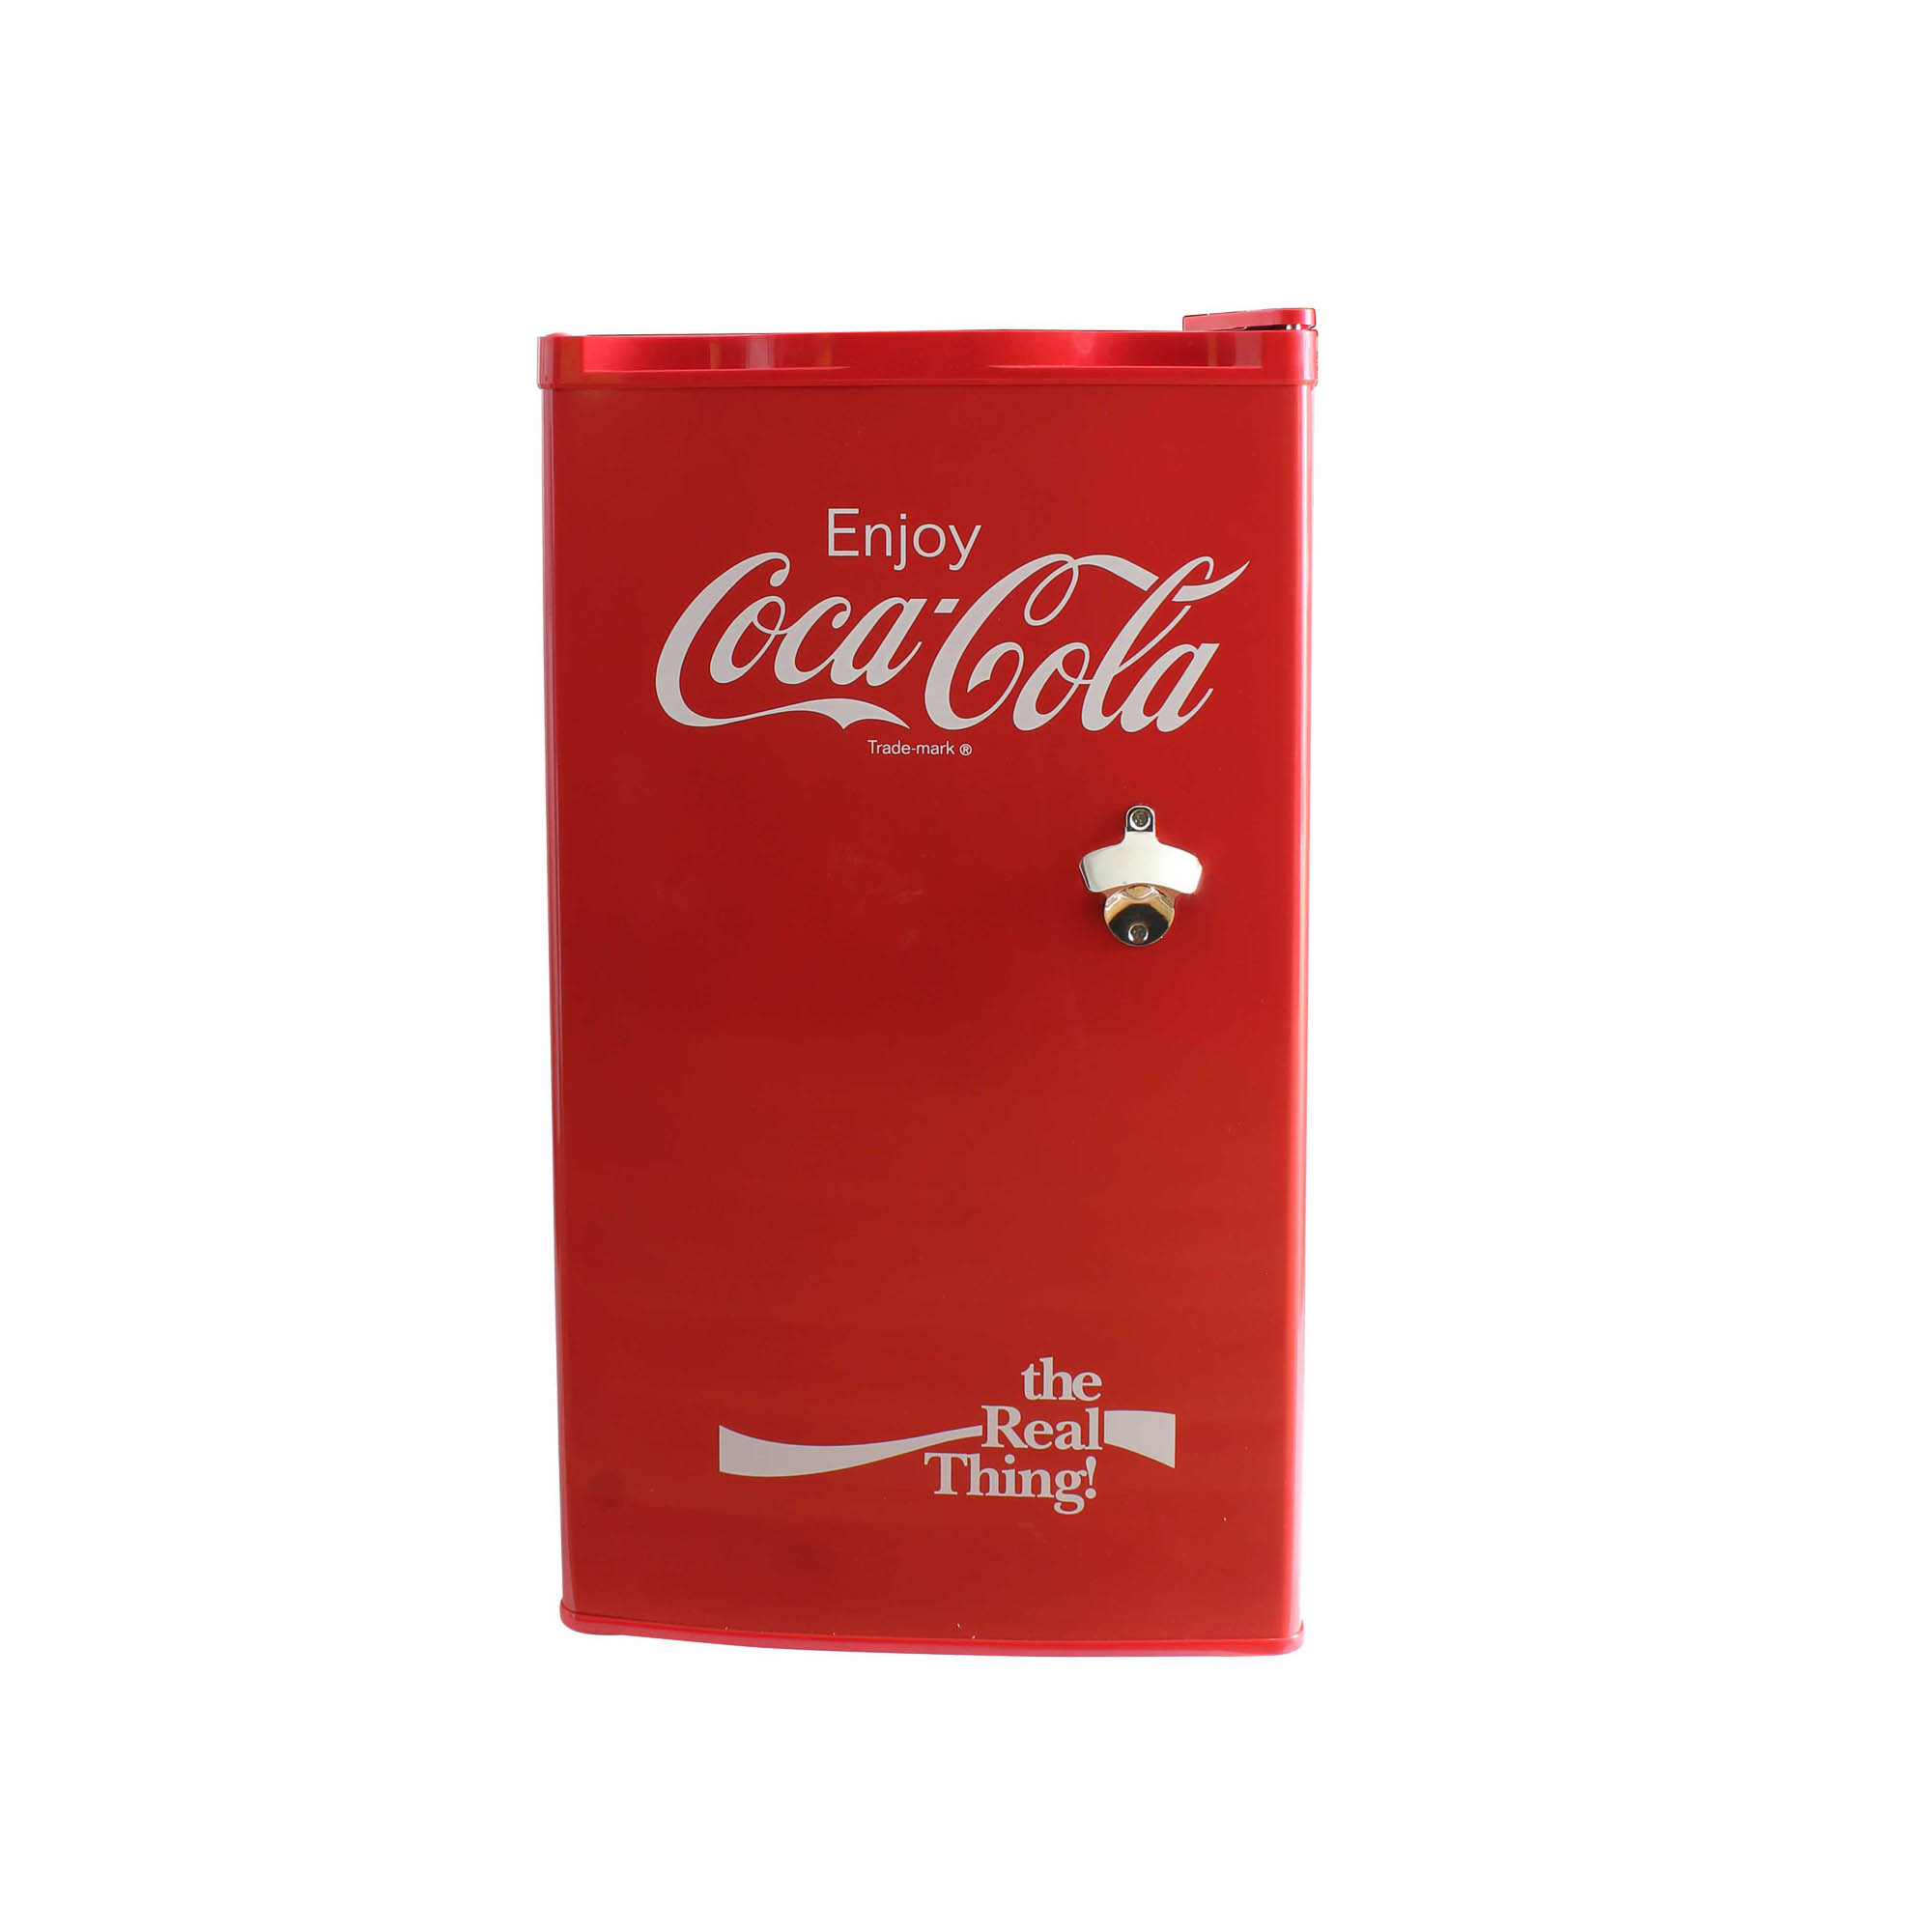 Frigobar Dace Coca cola 3.2p3 Enjoy